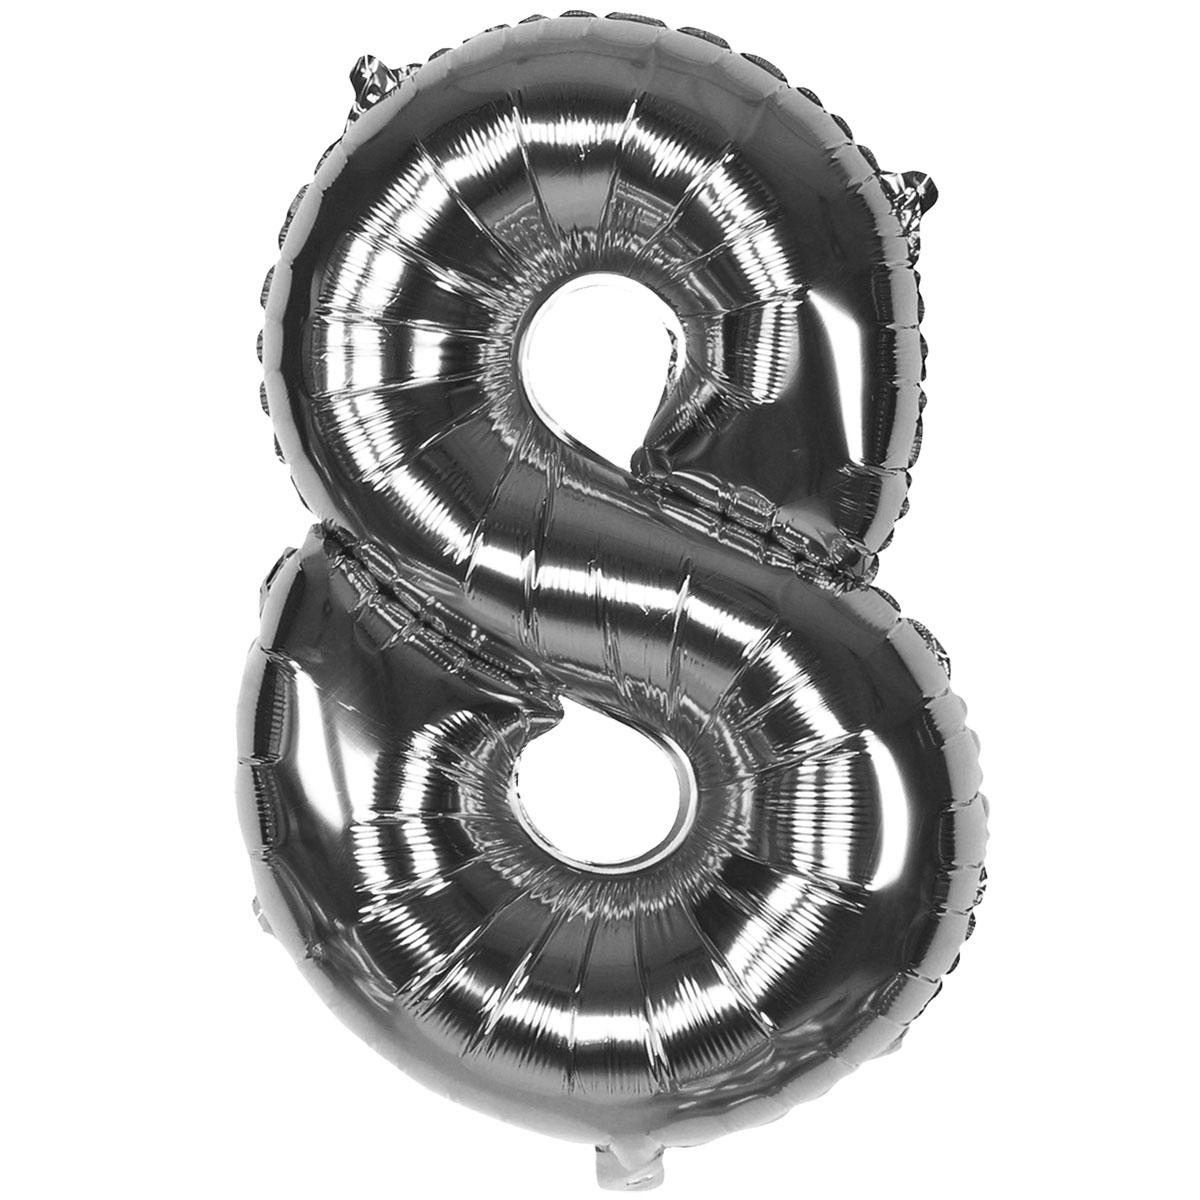 PARTY Balon broj 8 60cm UNL-1457 srebrni